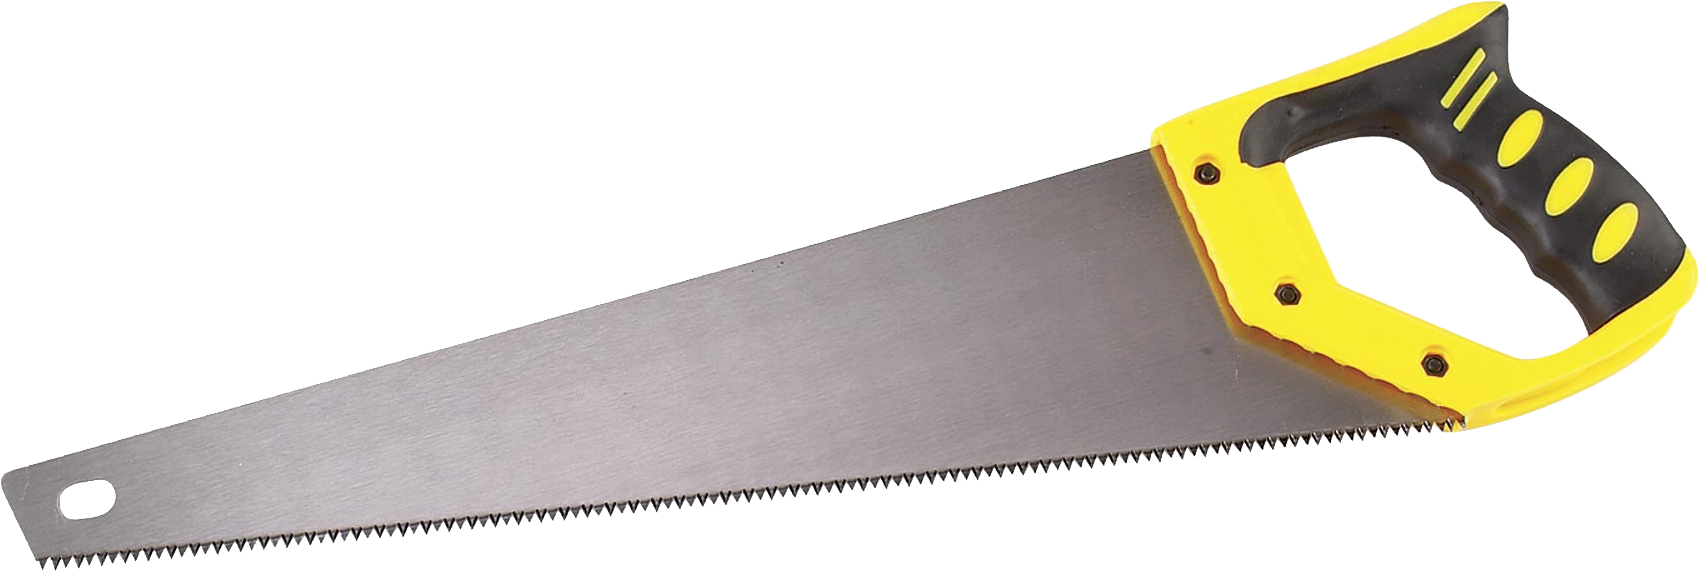 Изоляция пила. Ножовка столярная НС - 500 2д kam-Tools (30). Пилы и ножовки на белом фоне. Ножовка без фона. Ручная пила на белом фоне.